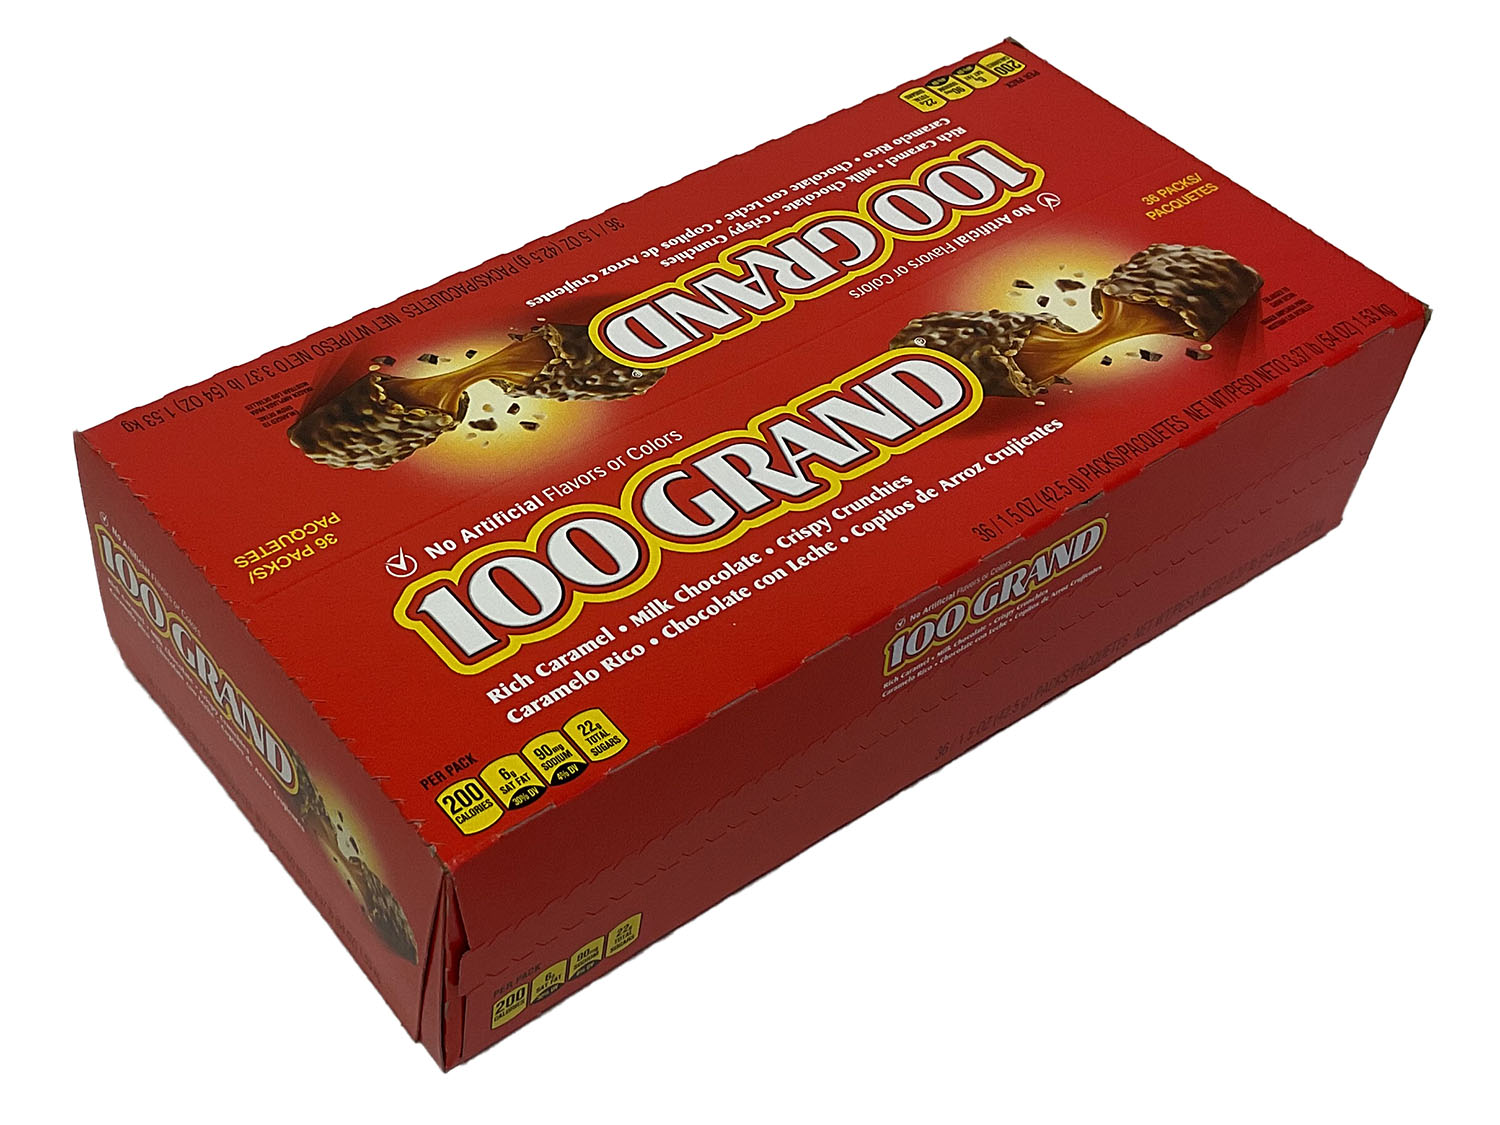 100 GRAND Candy Bars 36 ct